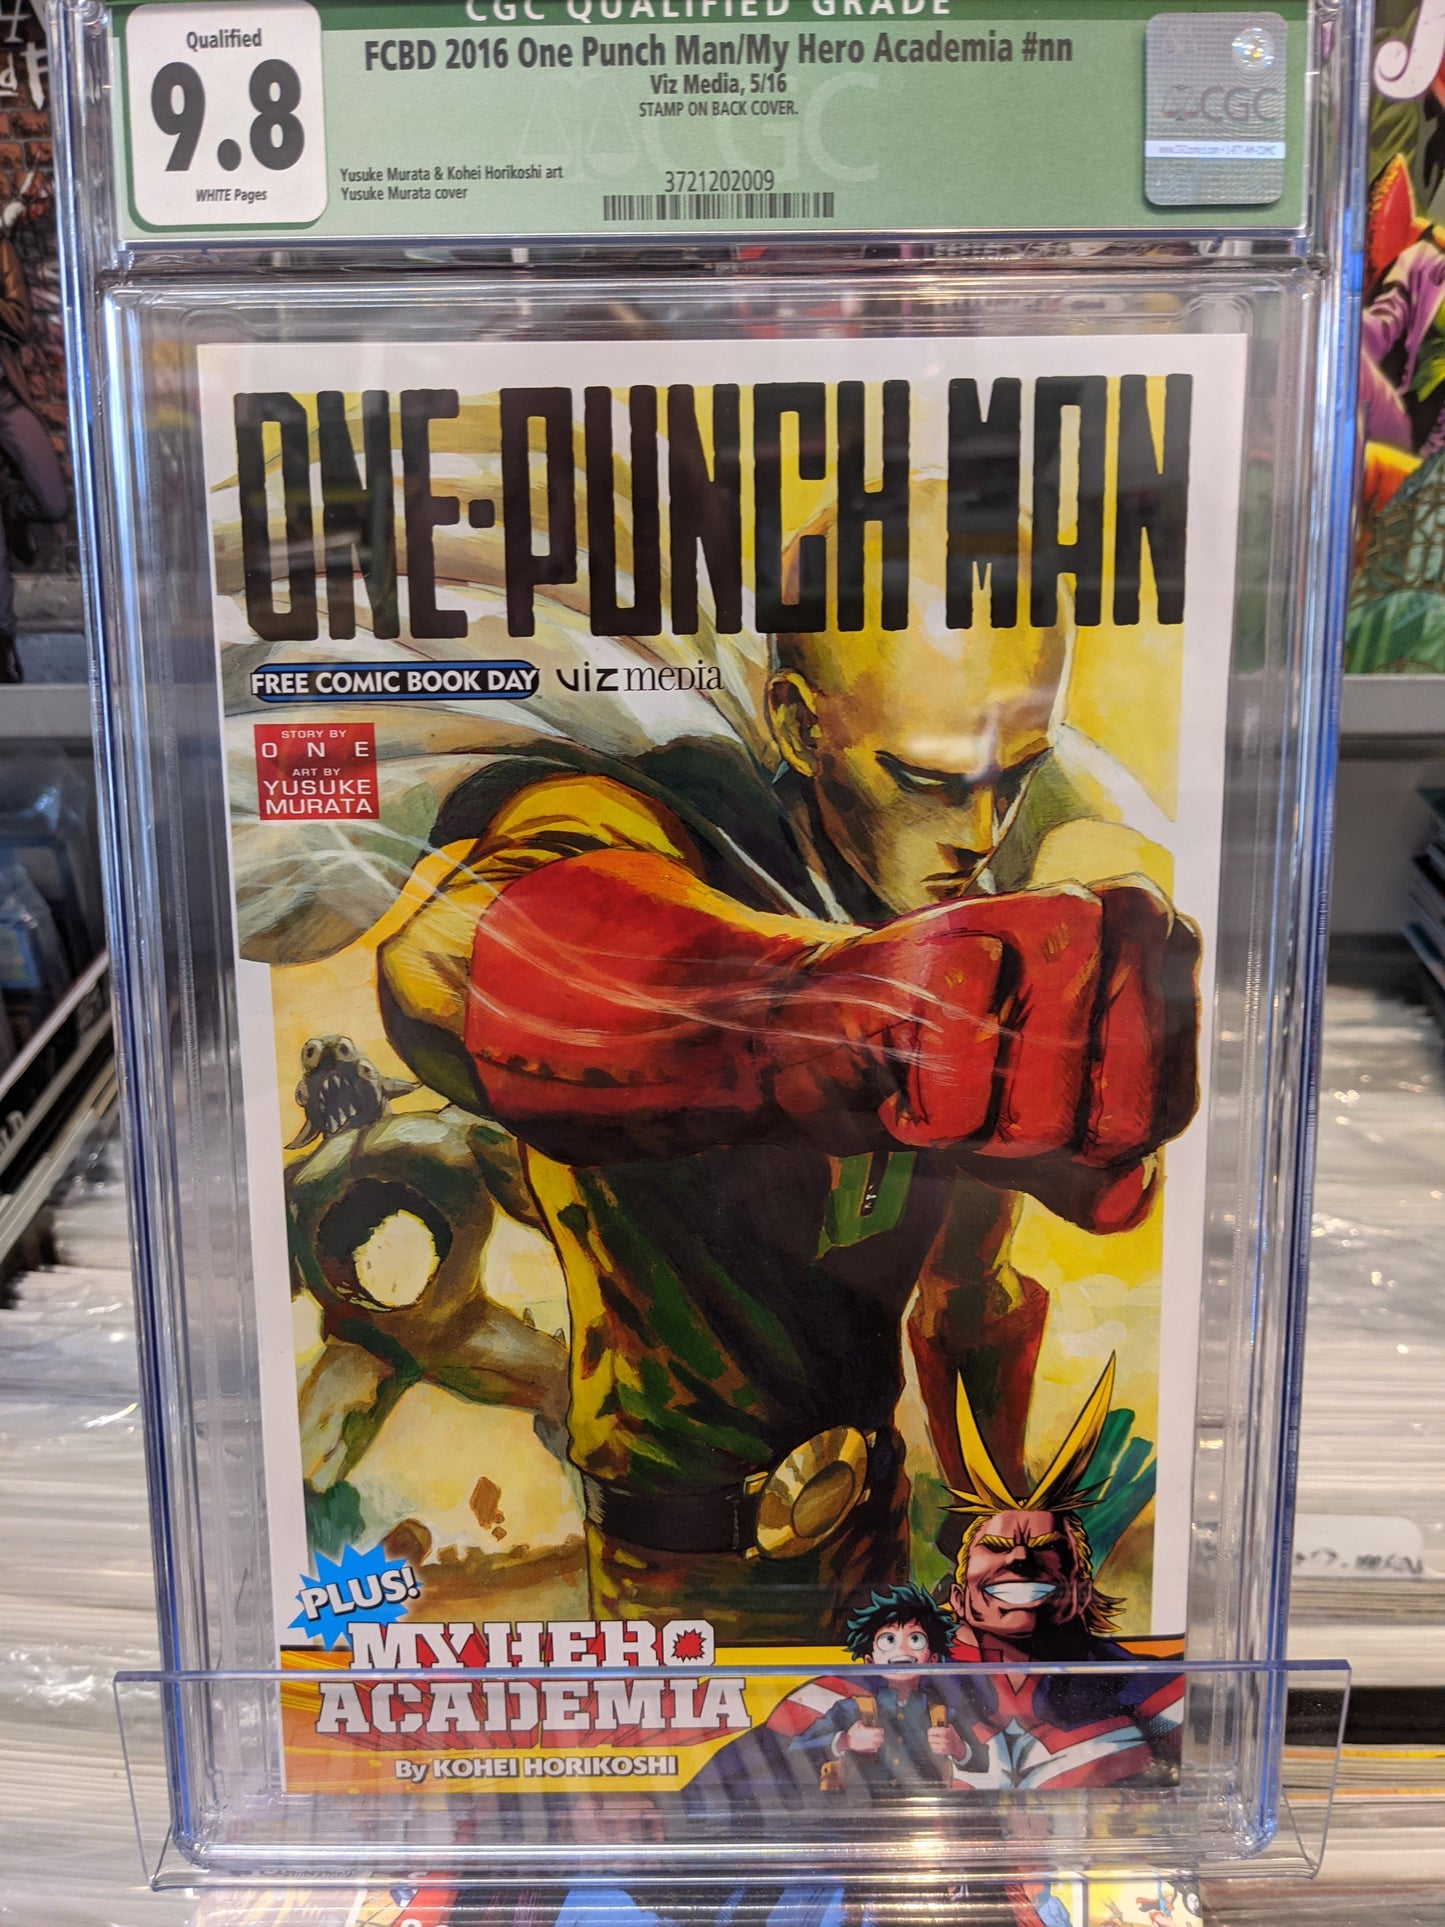 FCBD 2016 One Punch Man/ My Hero Academia - CGC - 1st One Punch Man